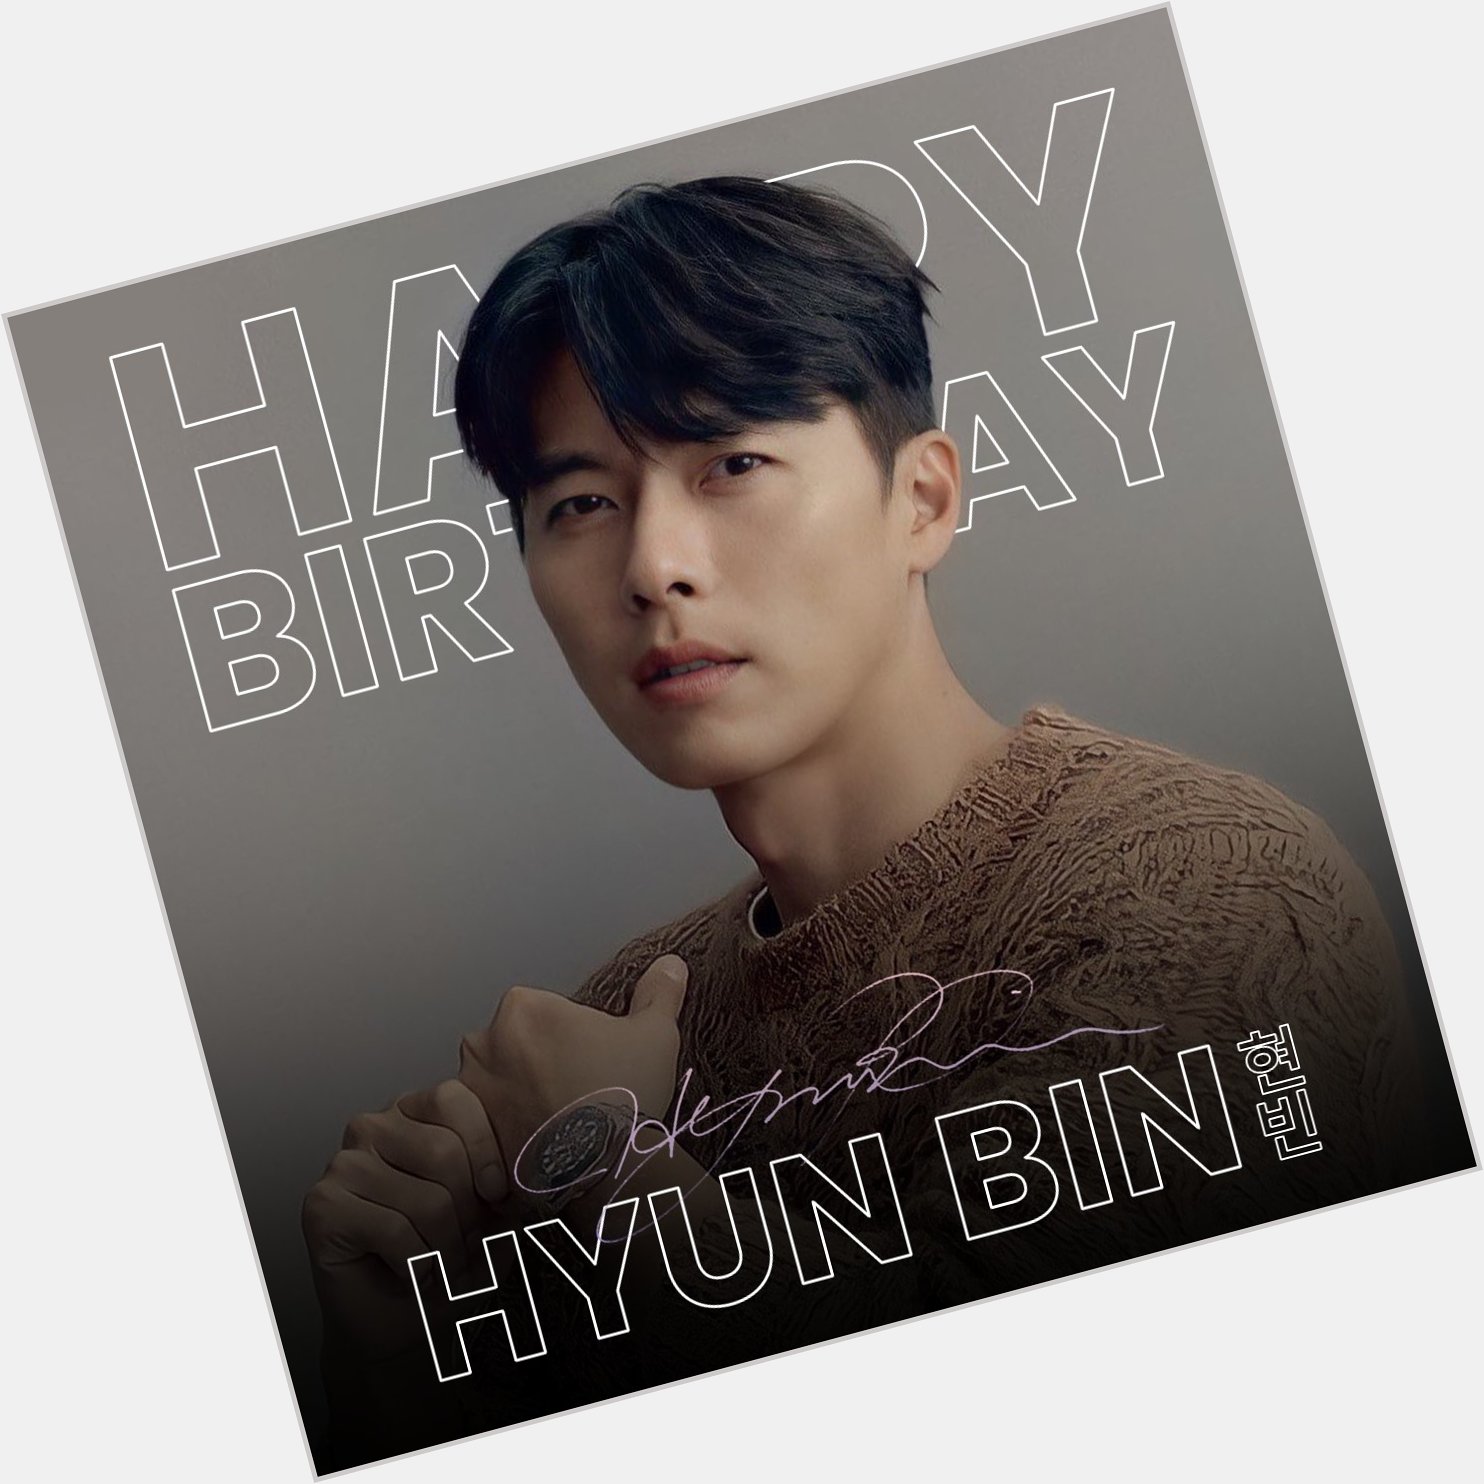 Happy birthday Hyun bin oppa 